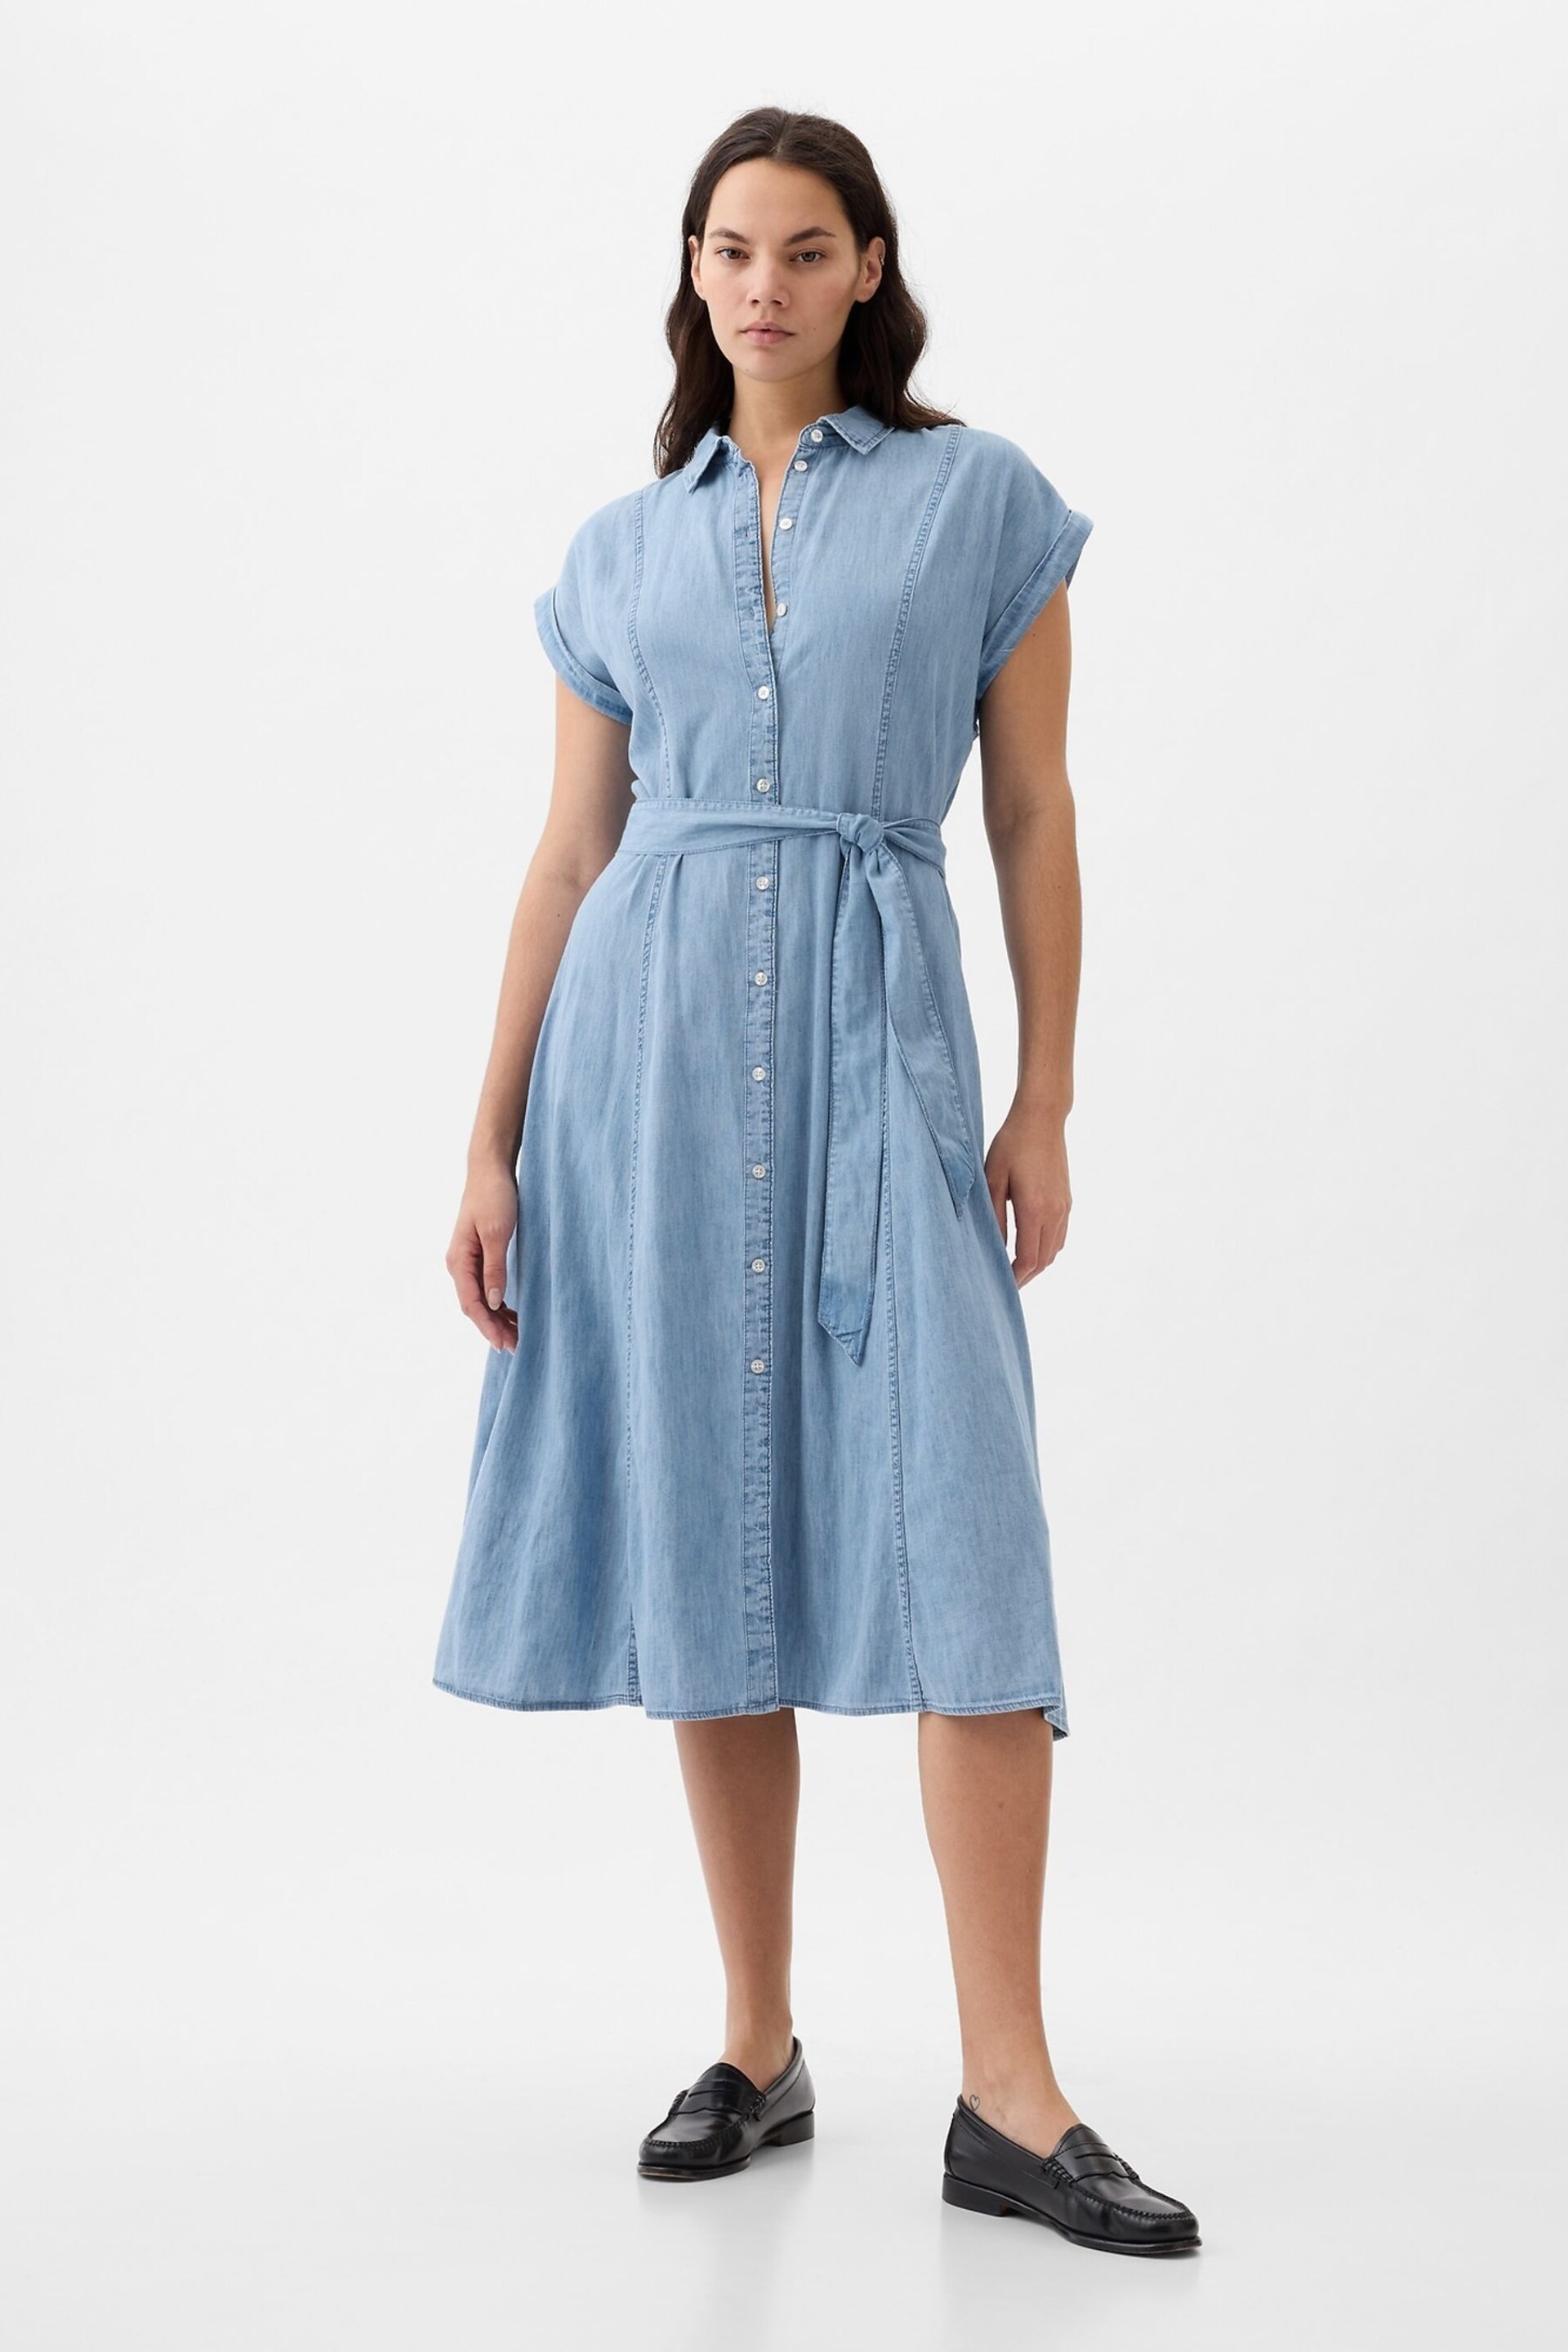 Gap Blue Denim Tie Waist Midi Shirt Dress - Image 1 of 5